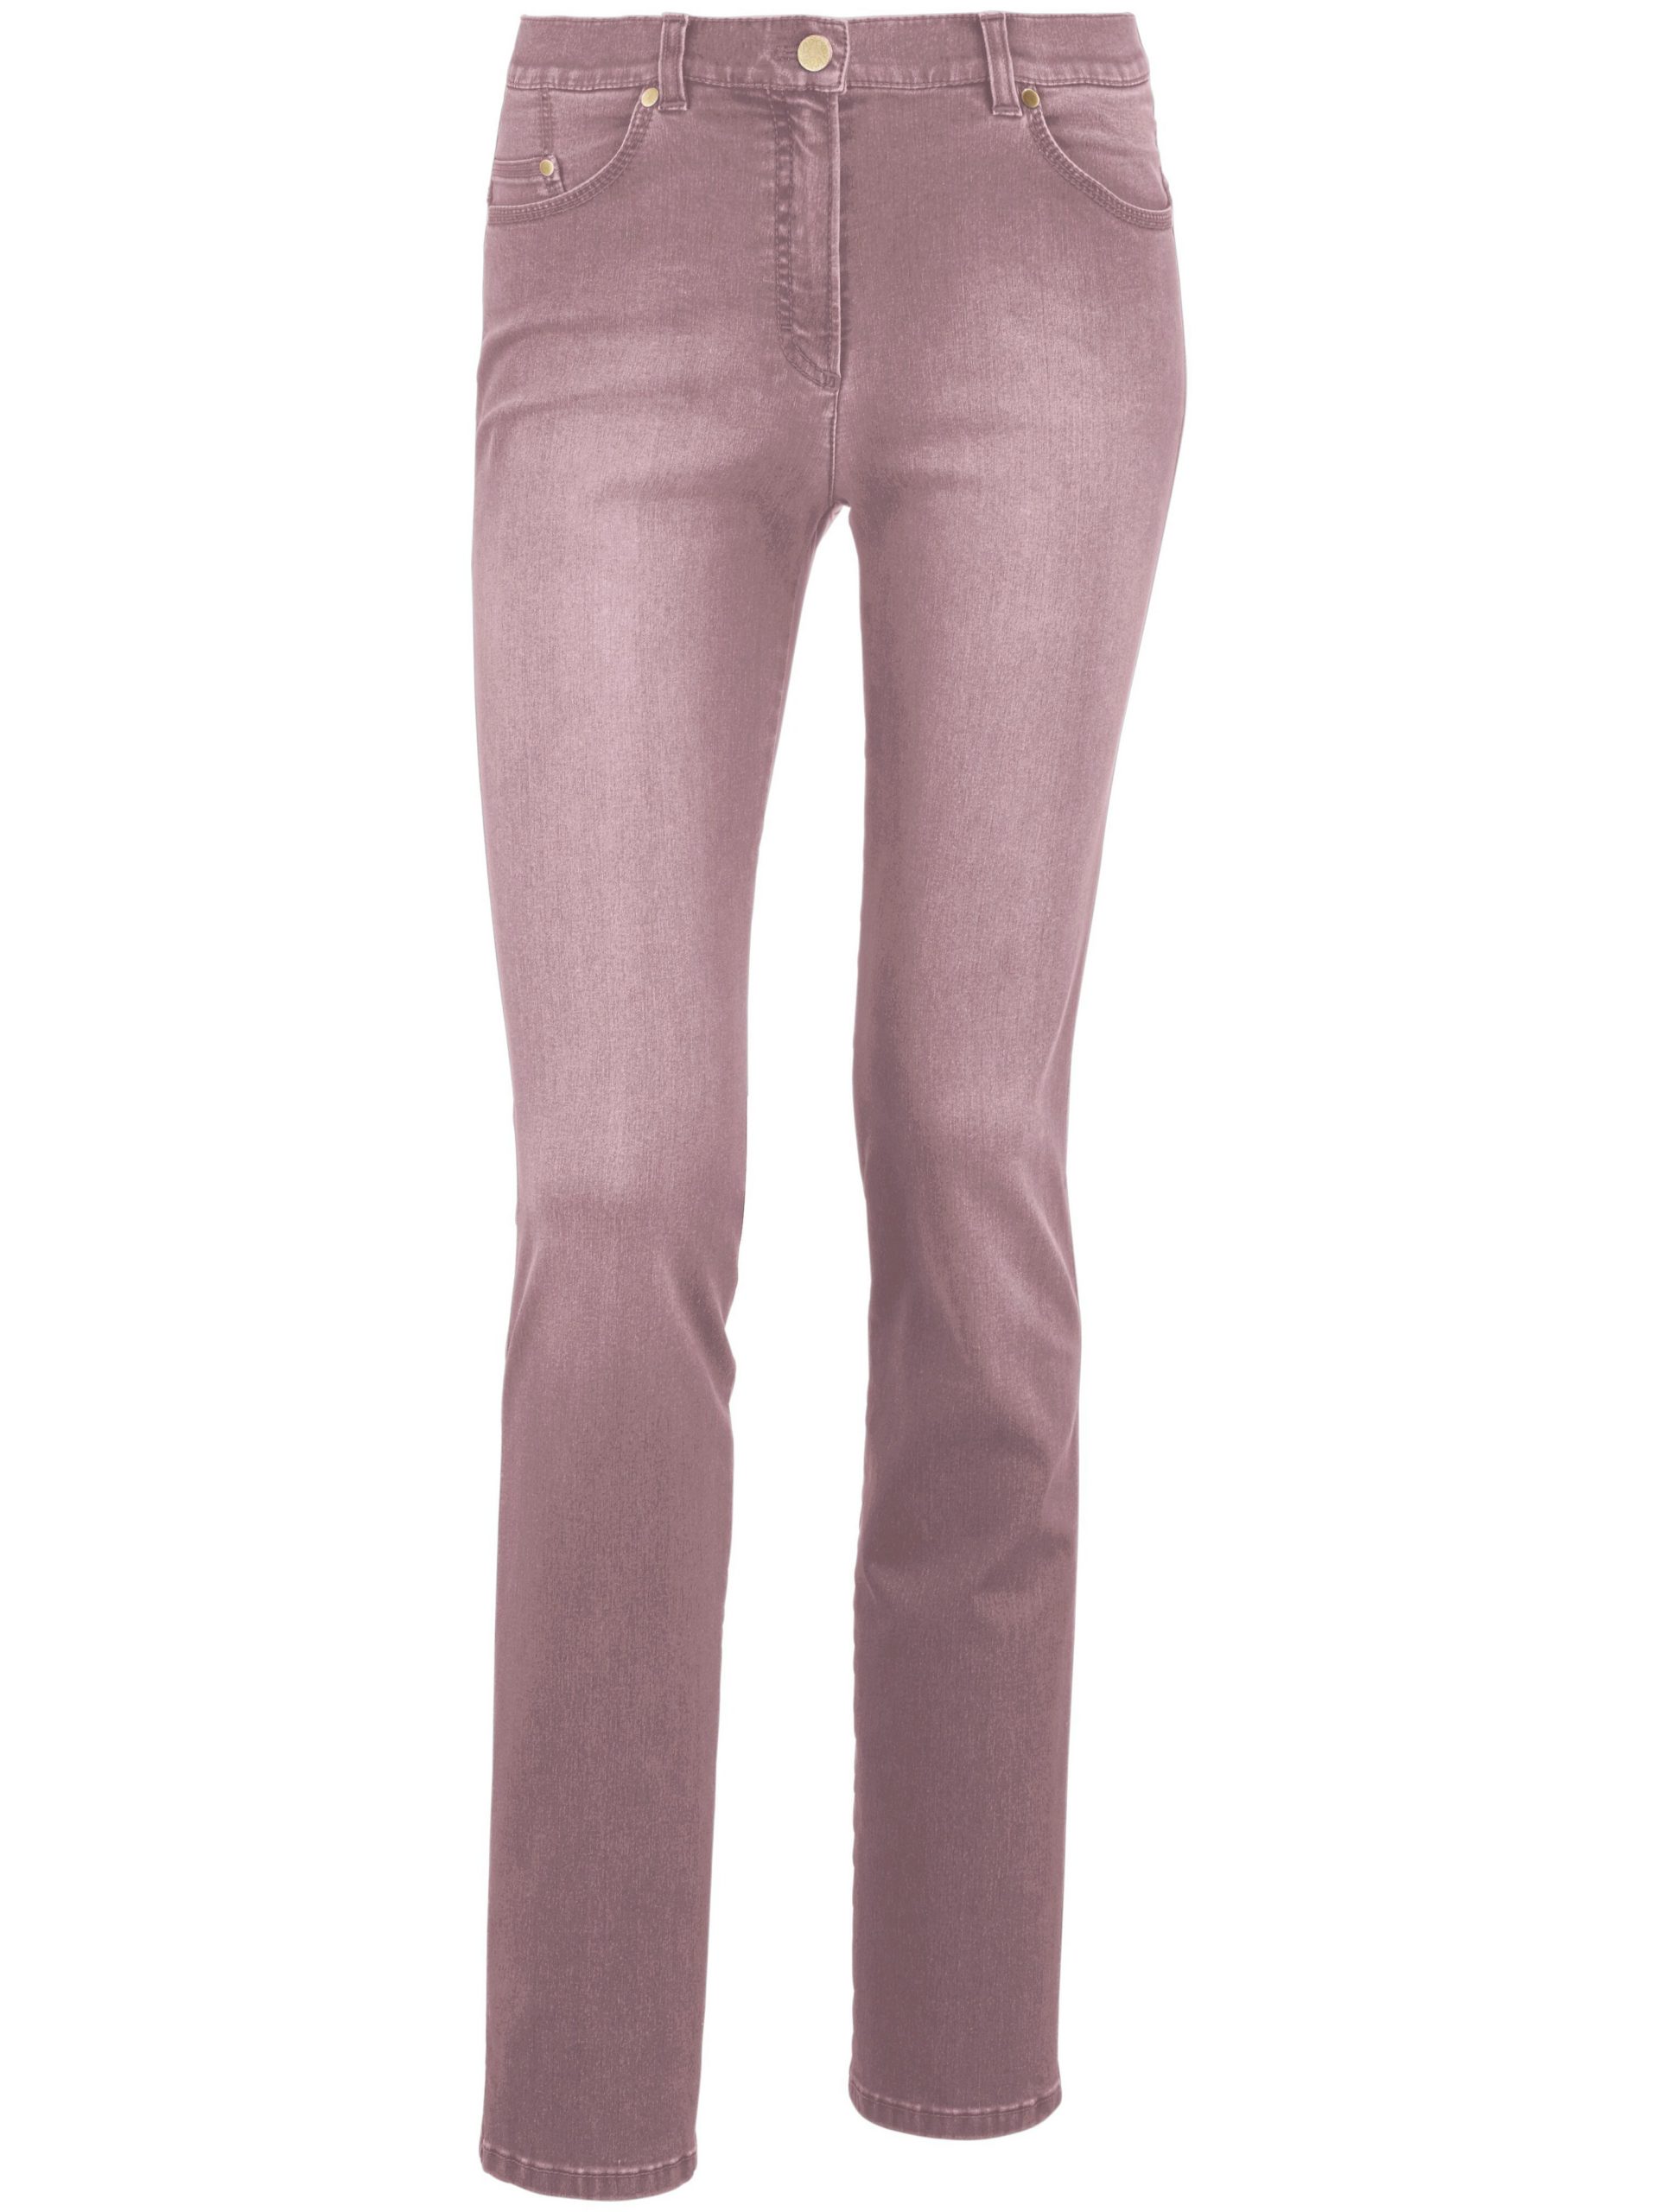 Modellerende Proform S Super Slim-jeans model Lea Van Raphaela by Brax paars Kopen